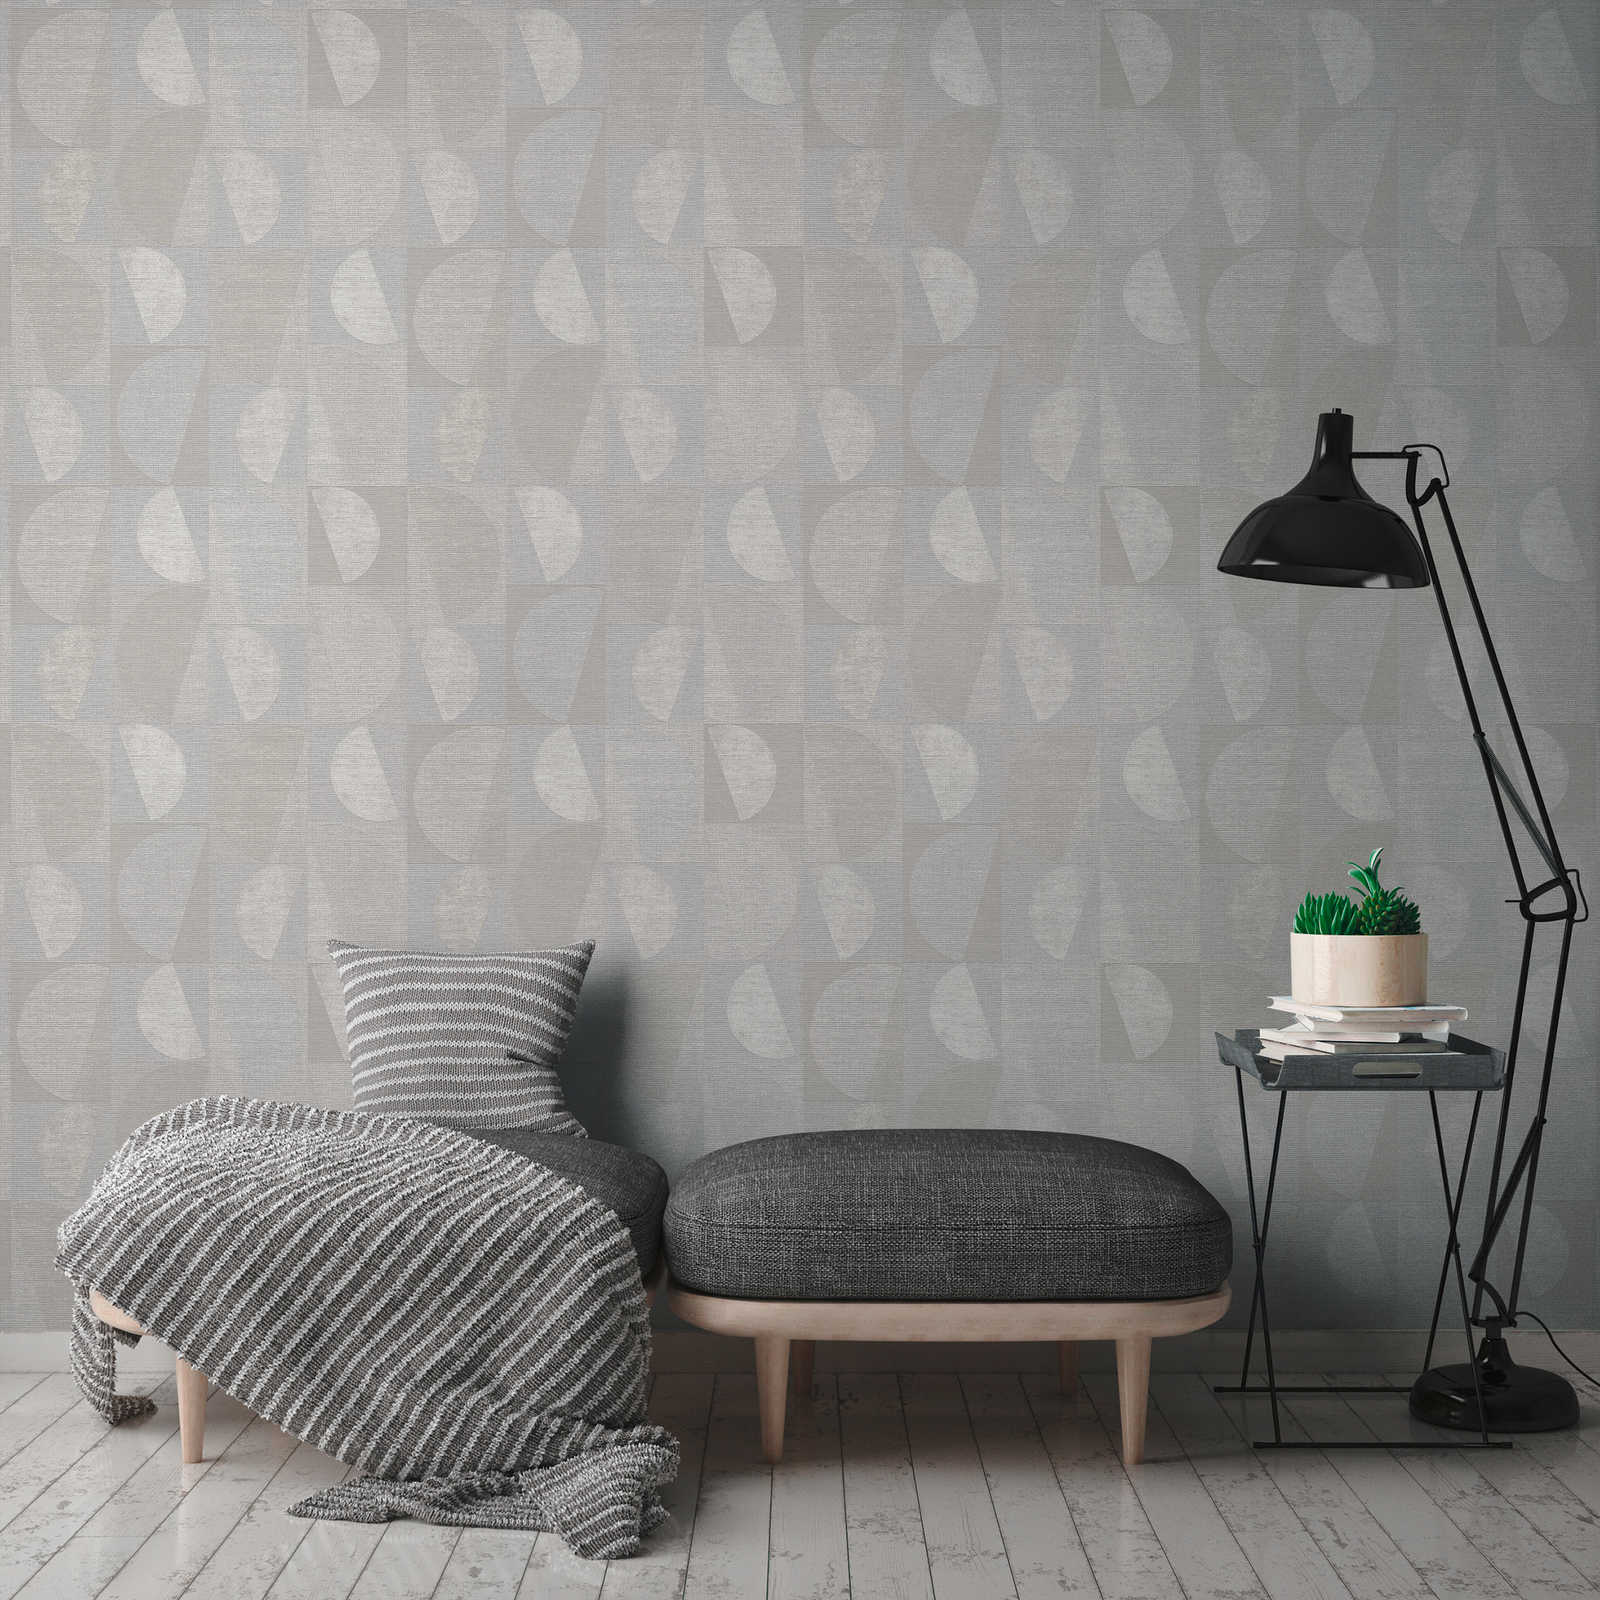             70er Retro Tapete Grafik-Muster & Textildesign – Beige, Grau, Creme
        